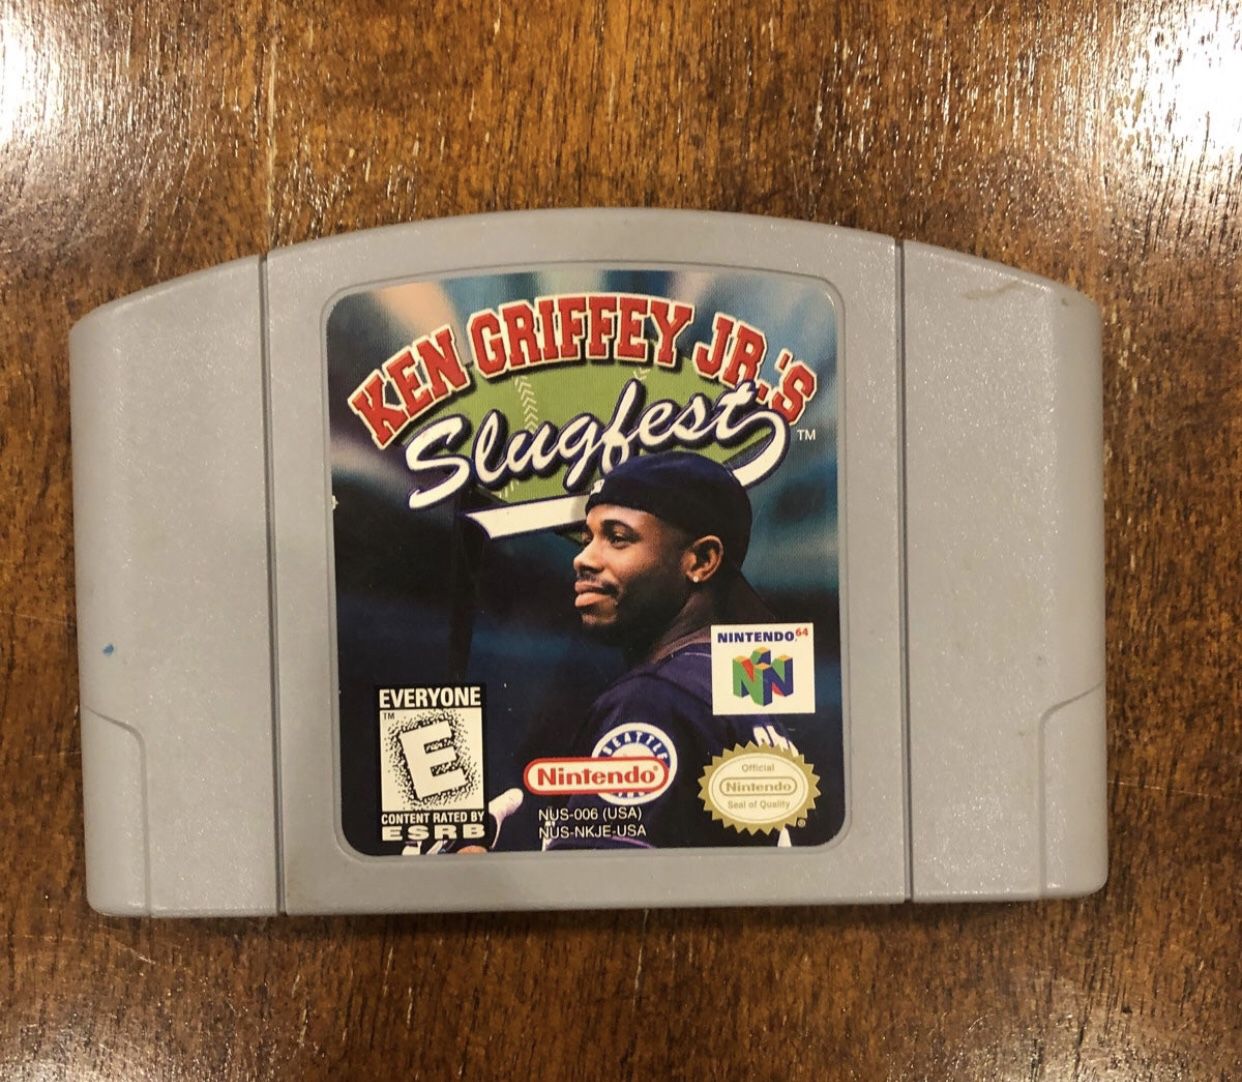 Ken Griffey Jr's Slugfest for Nintendo 64